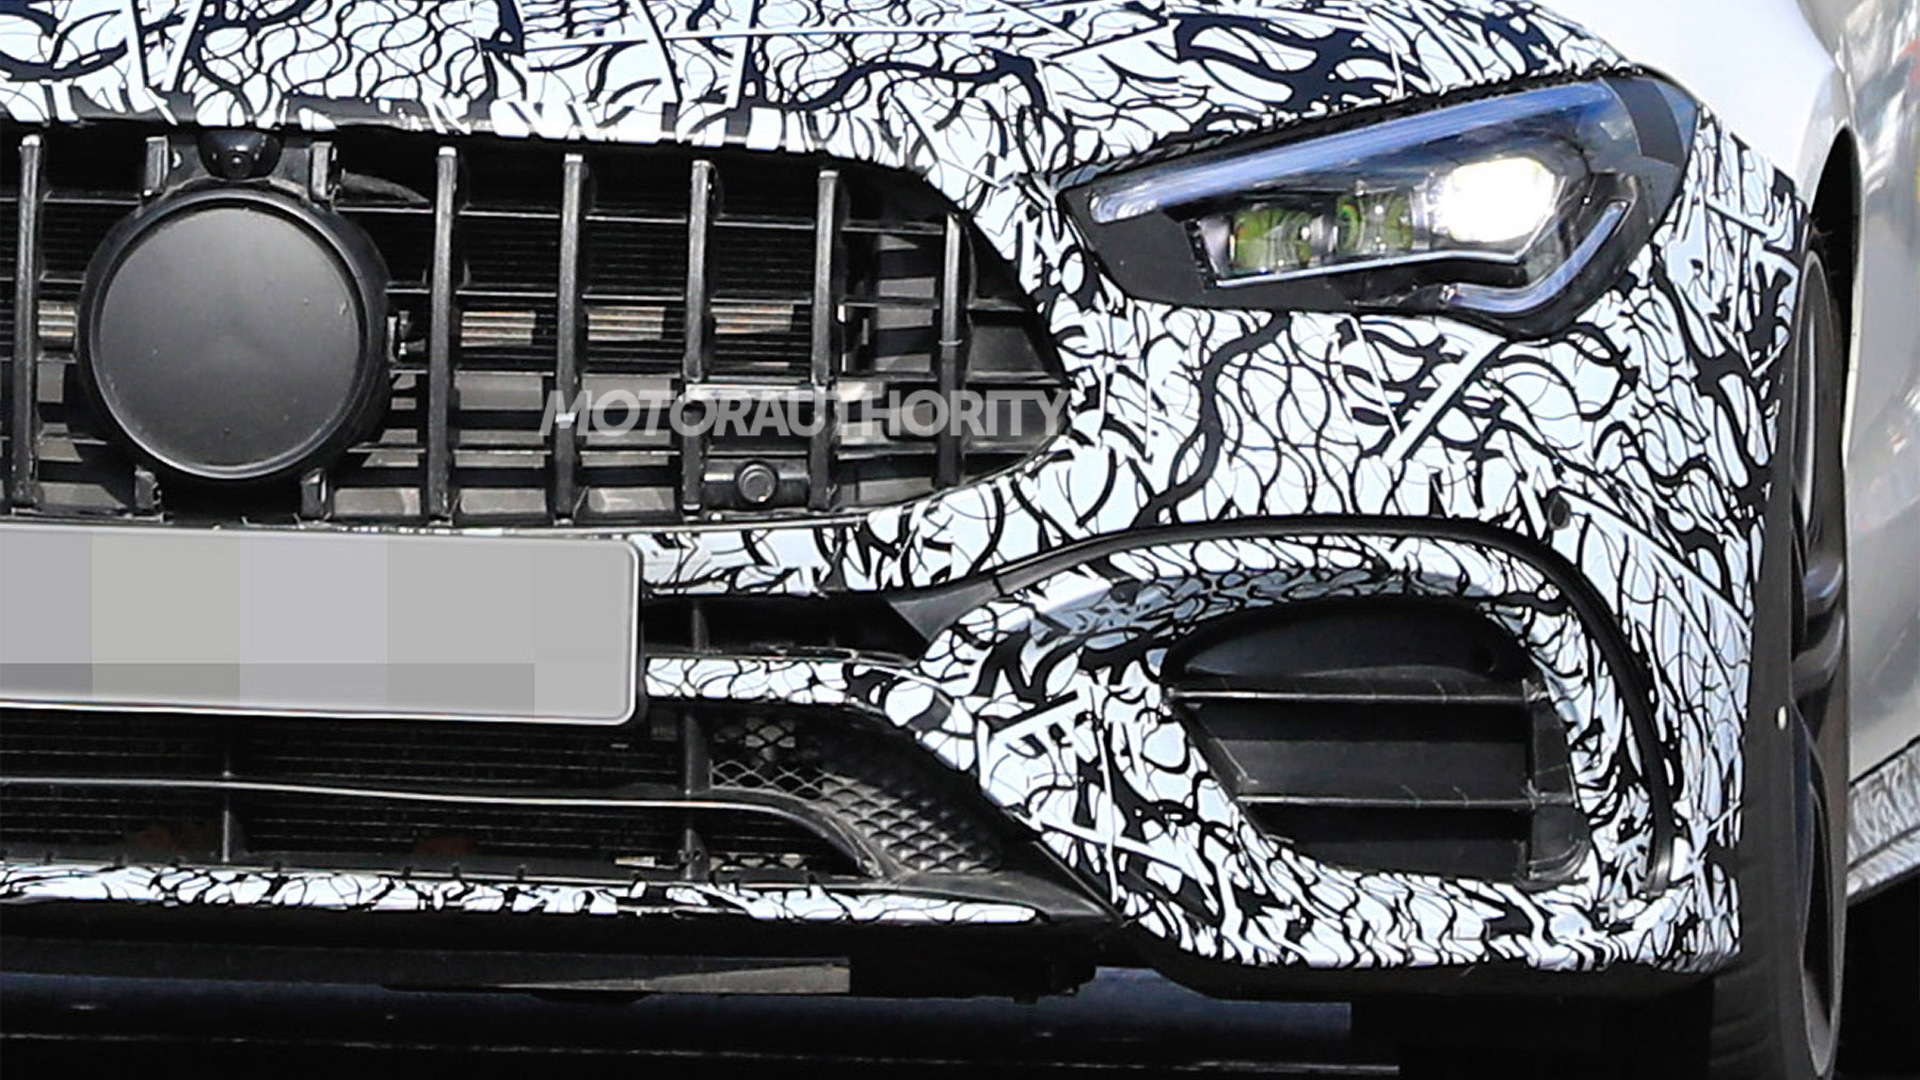 2020 Mercedes-AMG CLA45 Shooting Brake spy shots - Image via S. Baldauf/SB-Medien